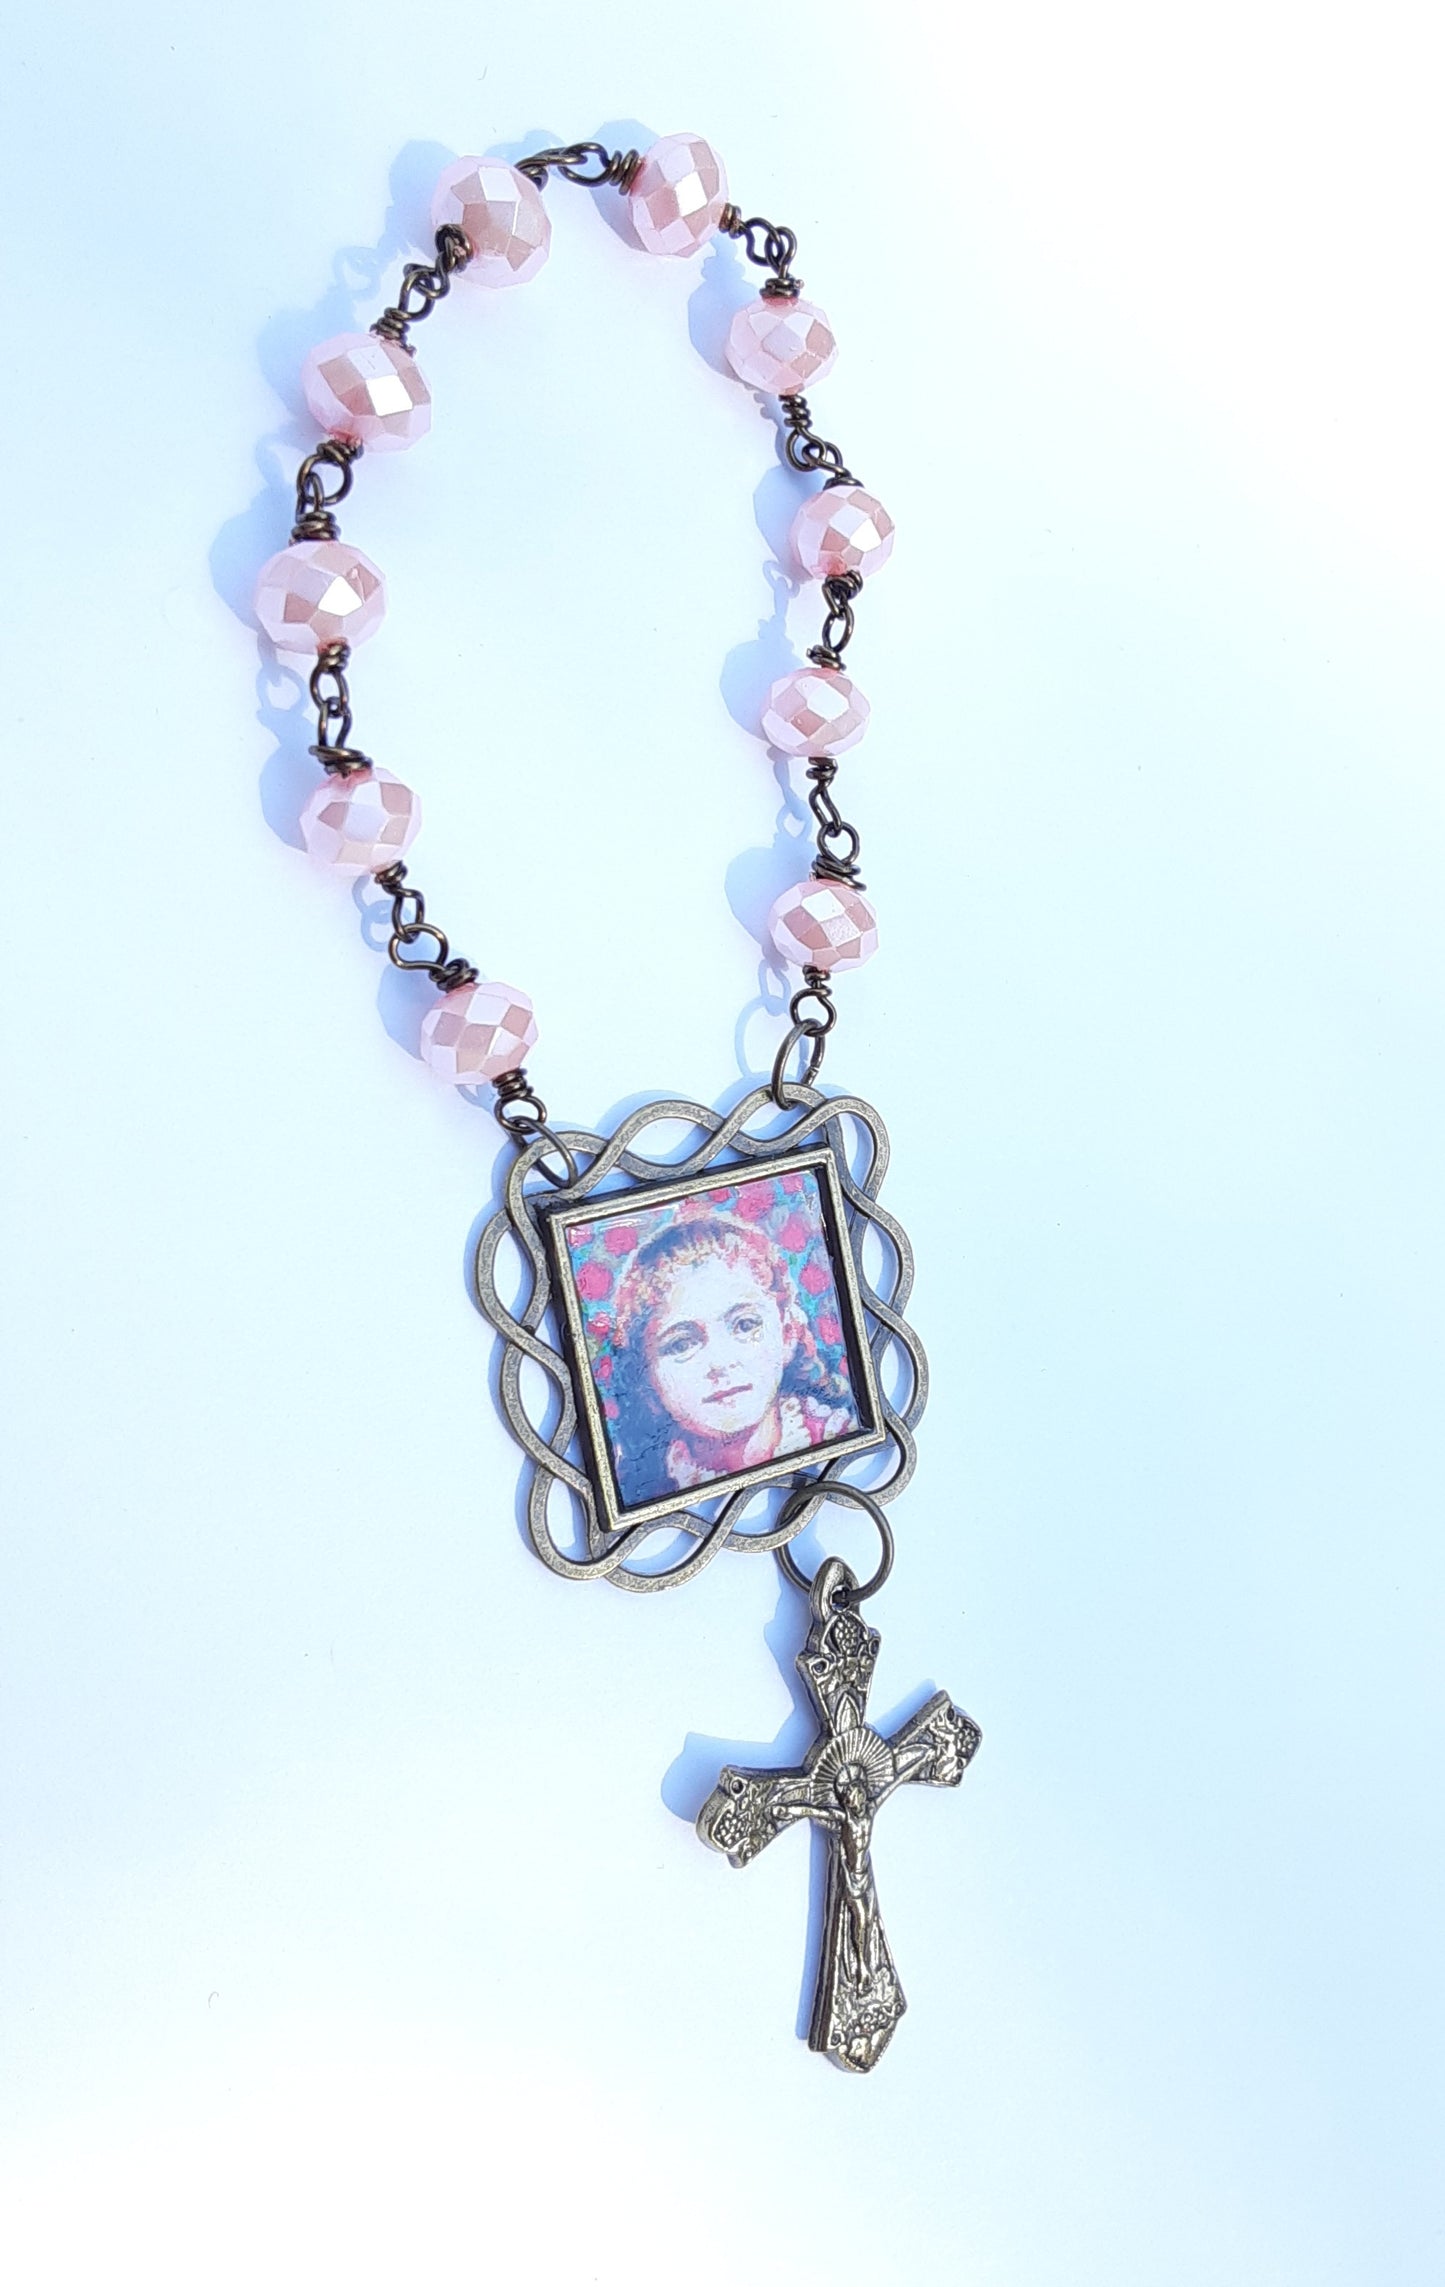 New! Saint Therese Single Decade Rosary